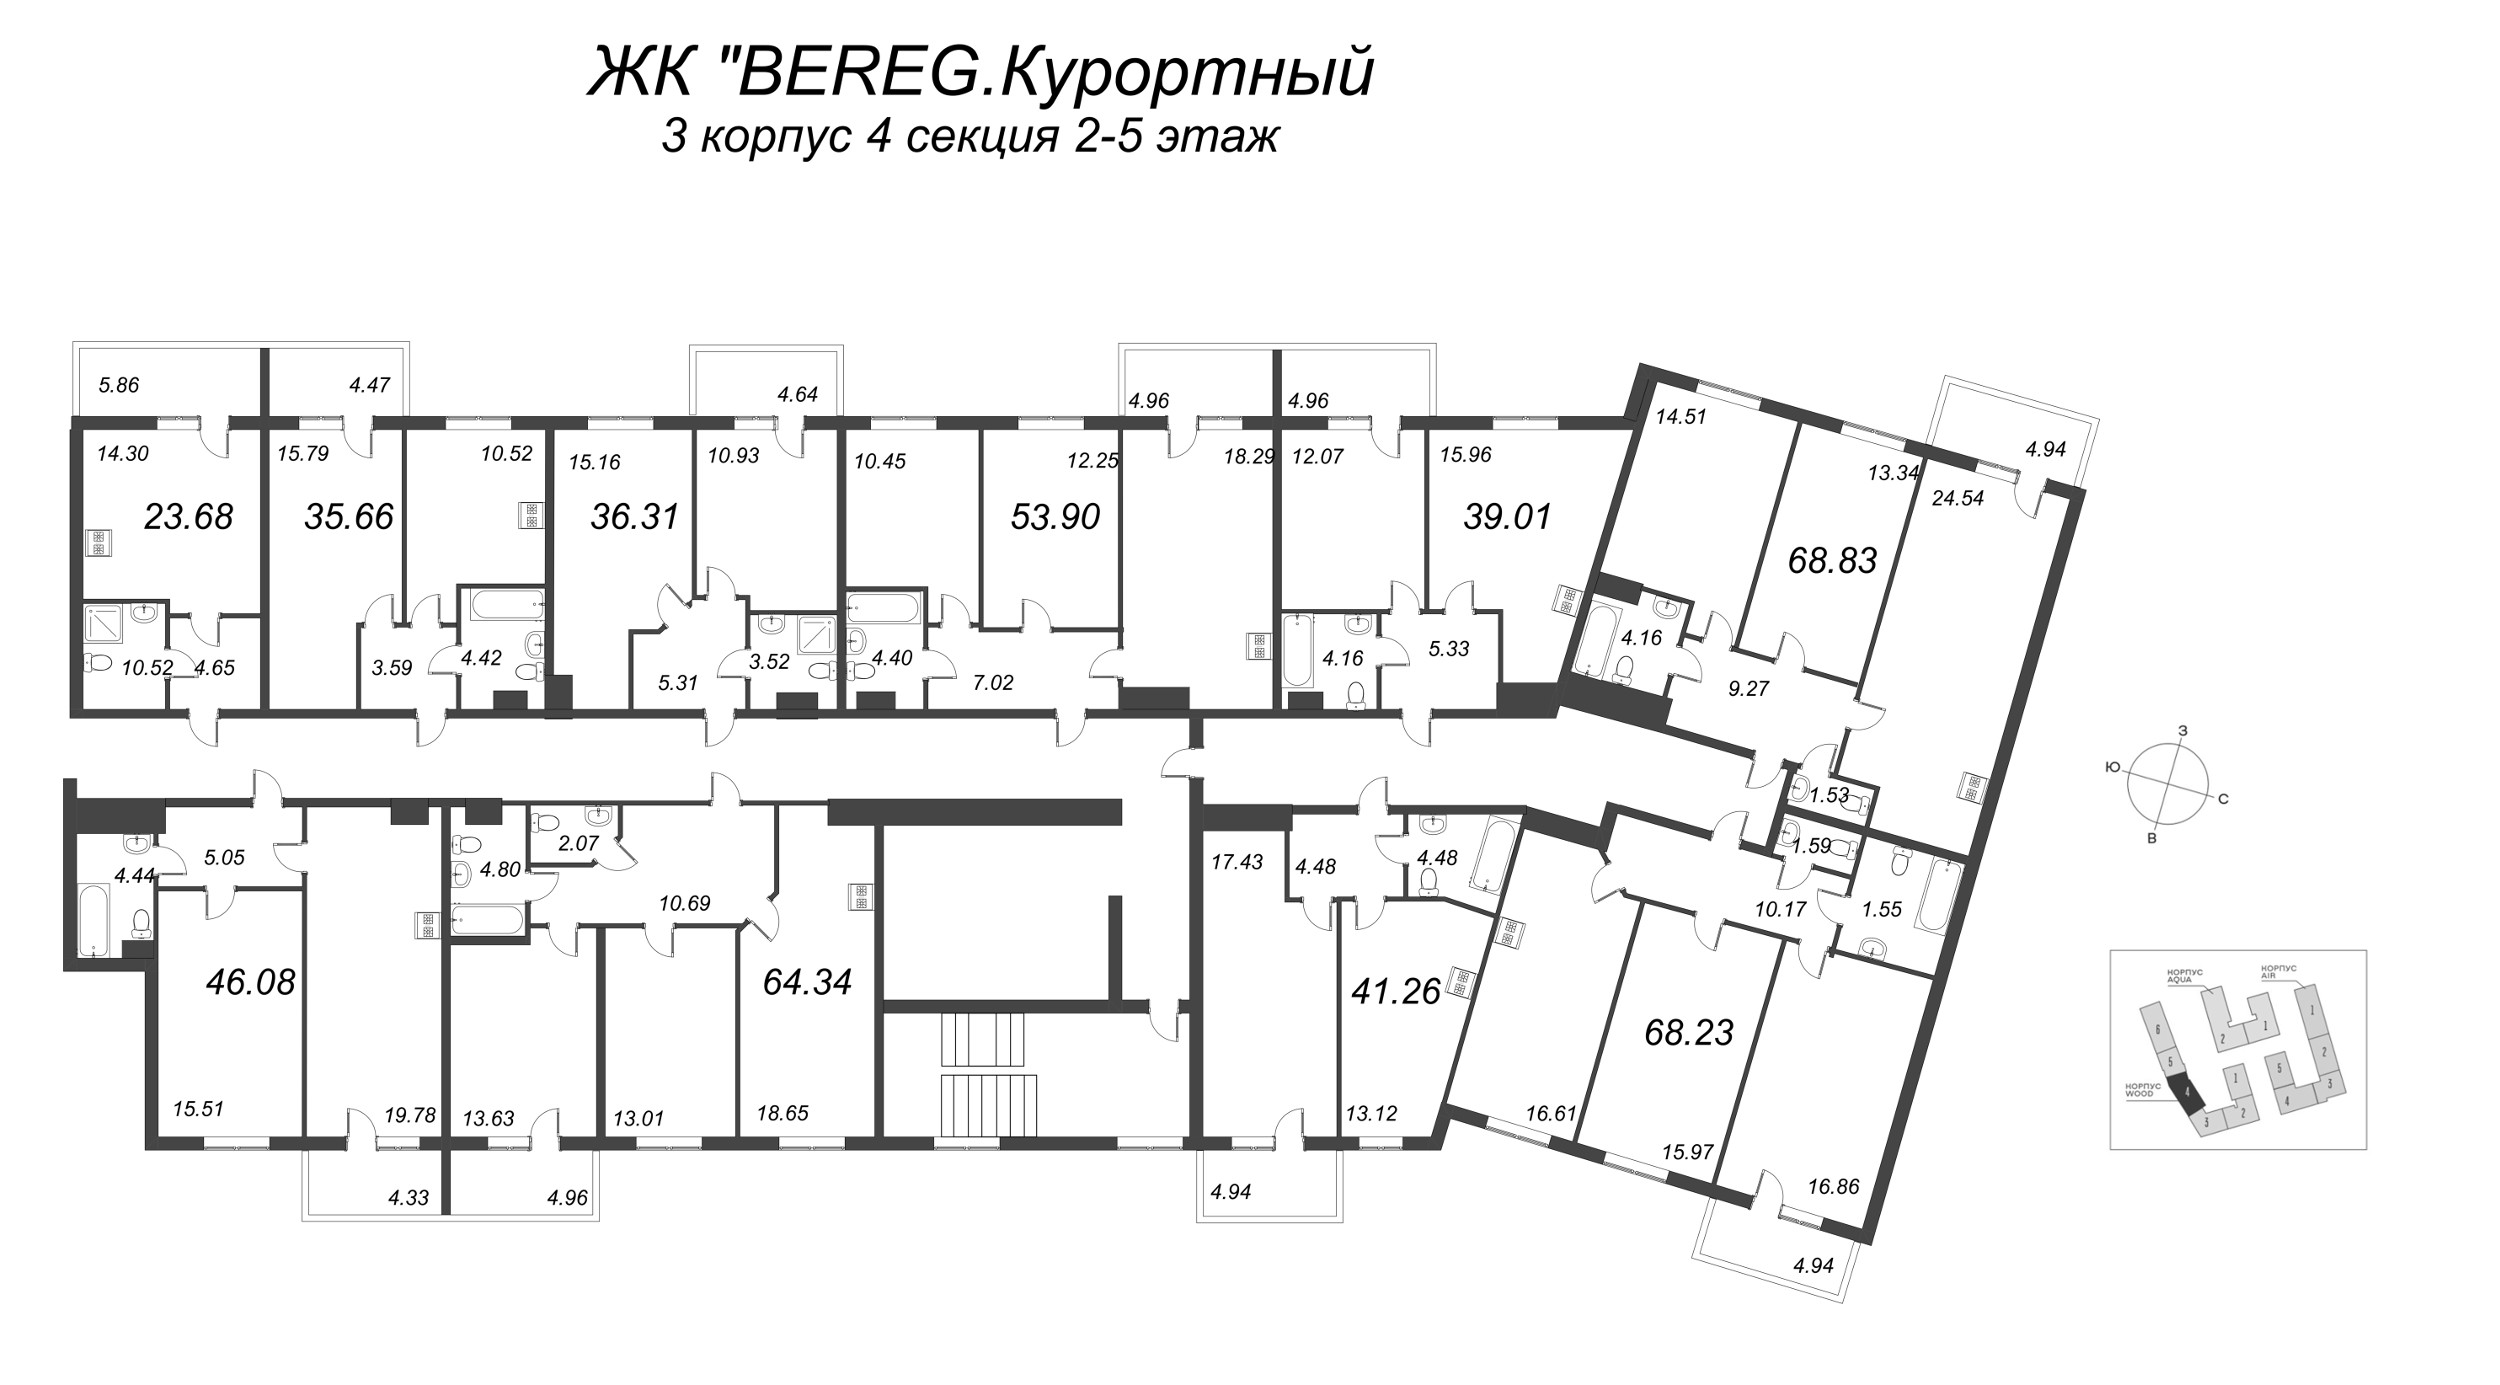 3-комнатная (Евро) квартира, 64.34 м² - планировка этажа